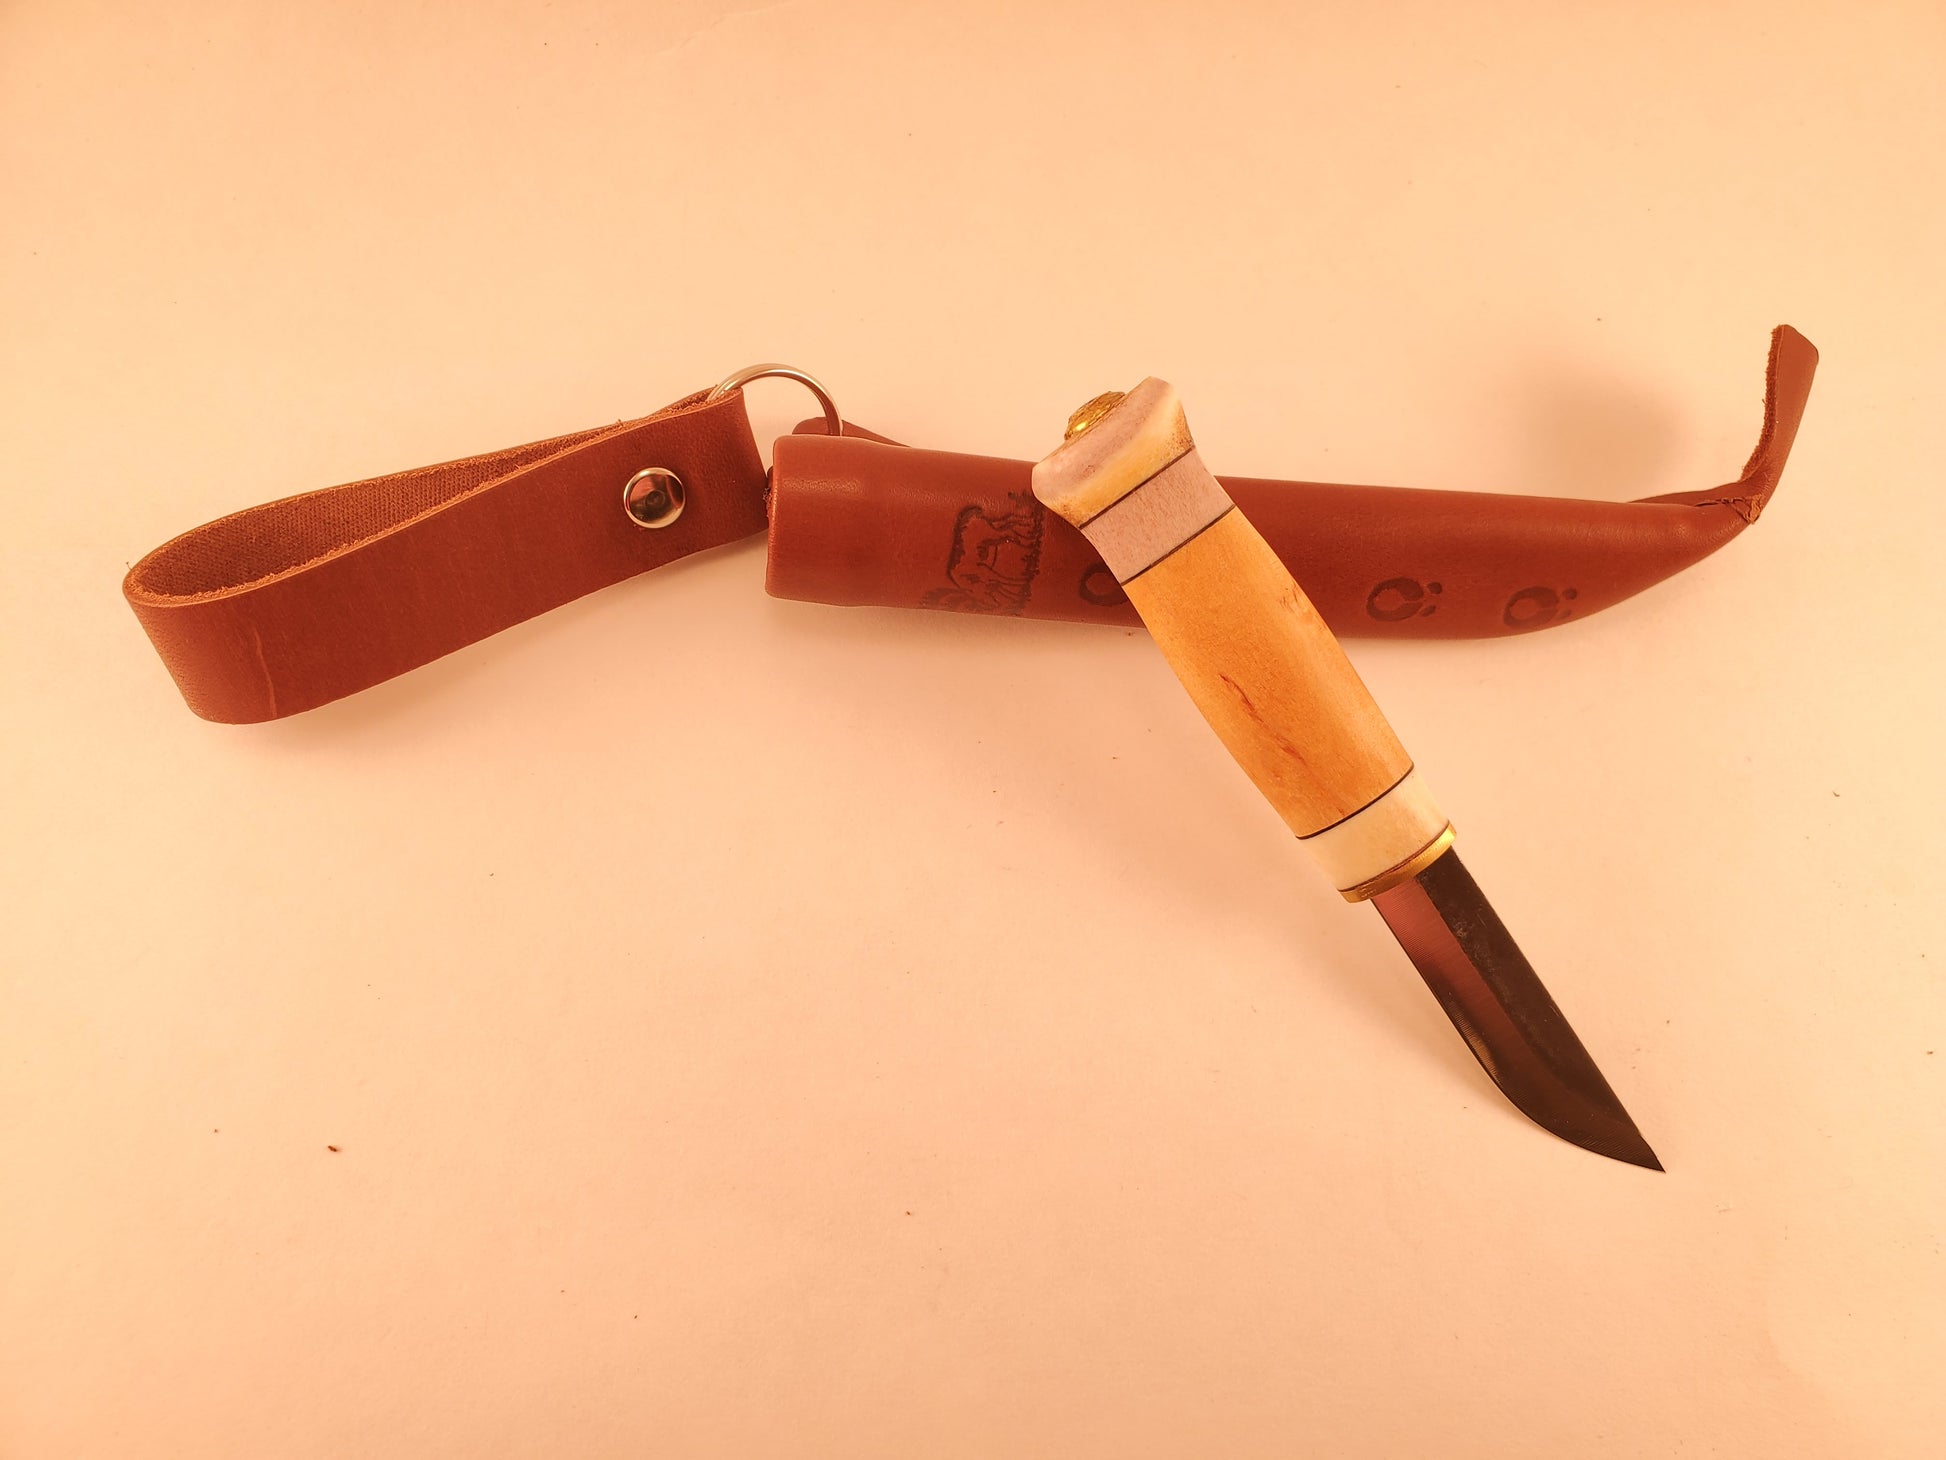 Wood Jewel Little knife Bushcraft Outdoor Knife Puukko